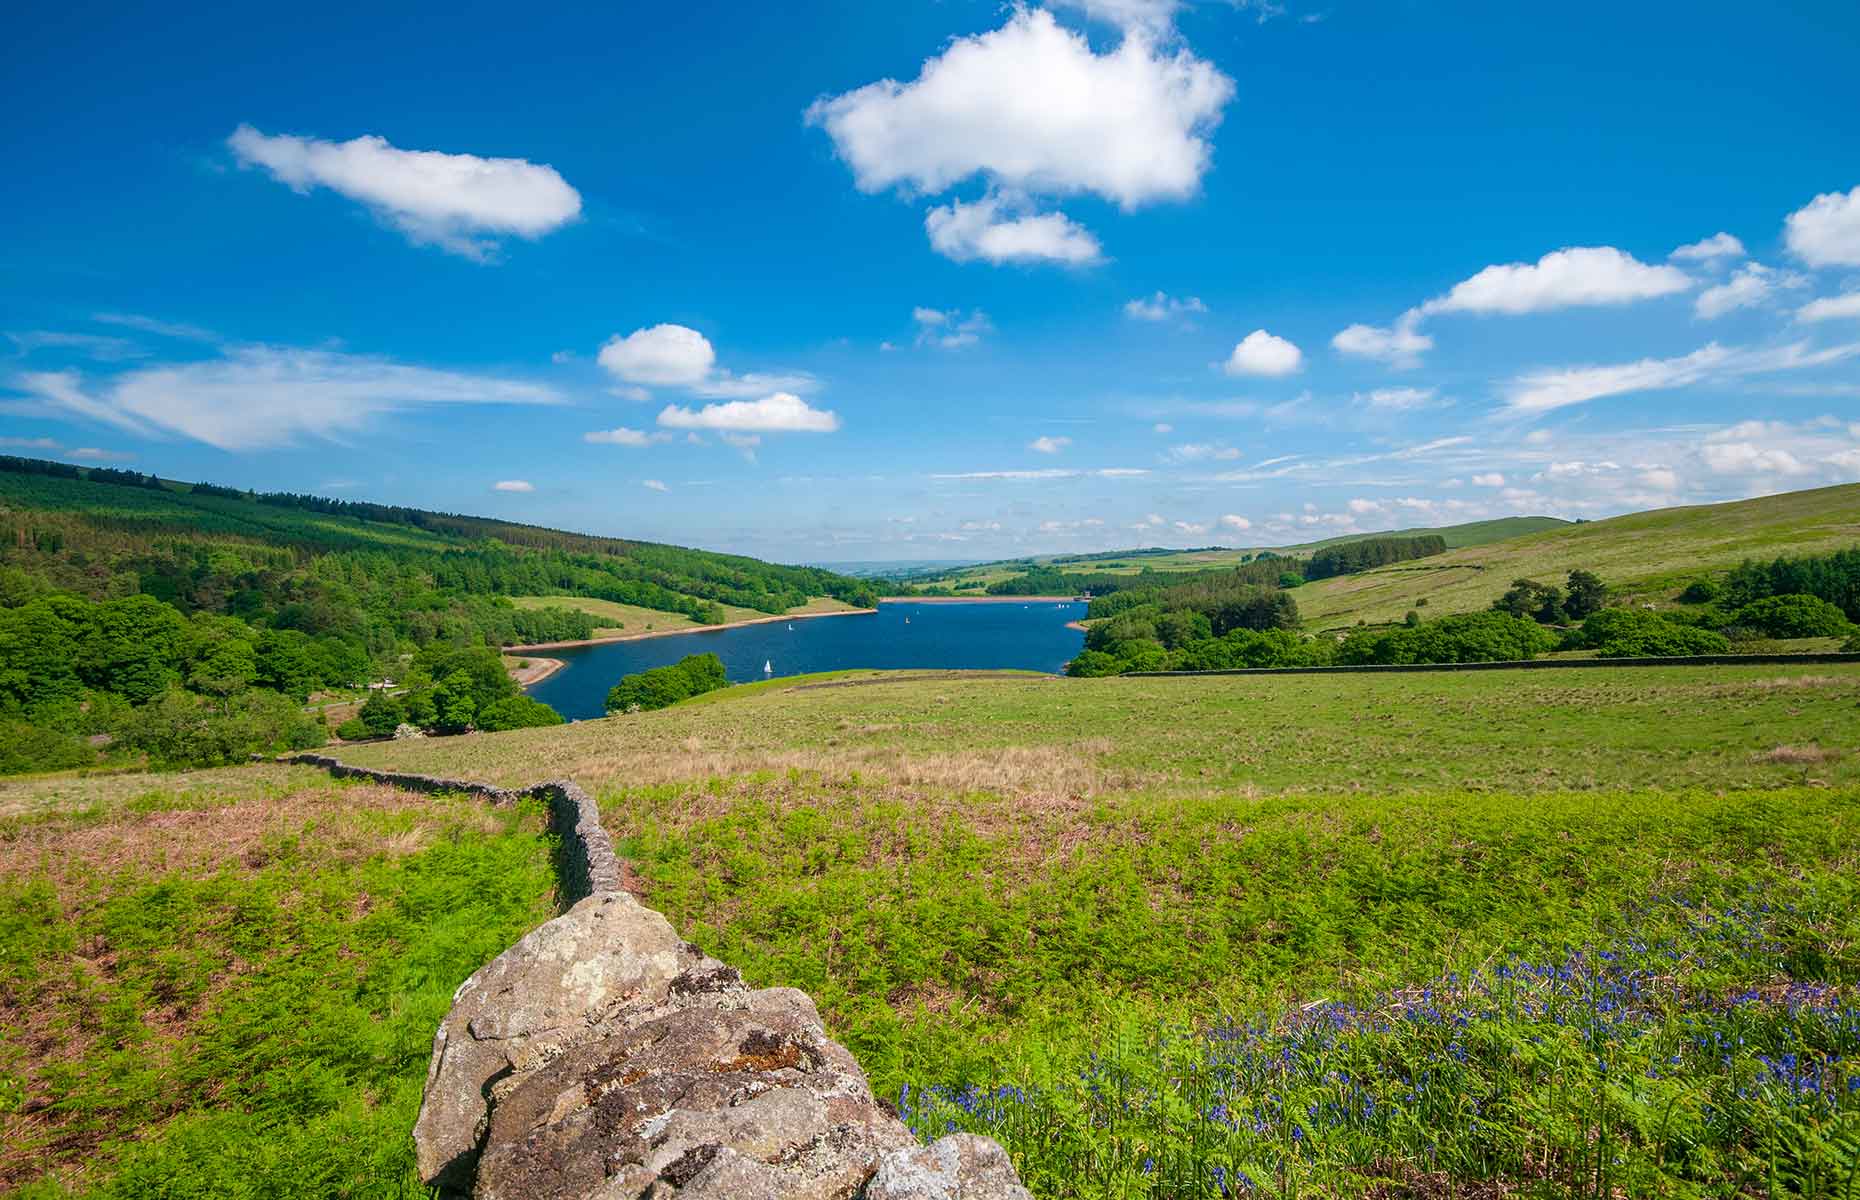 Goyt Valley (Image: Anthony Dillon/Shutterstock)